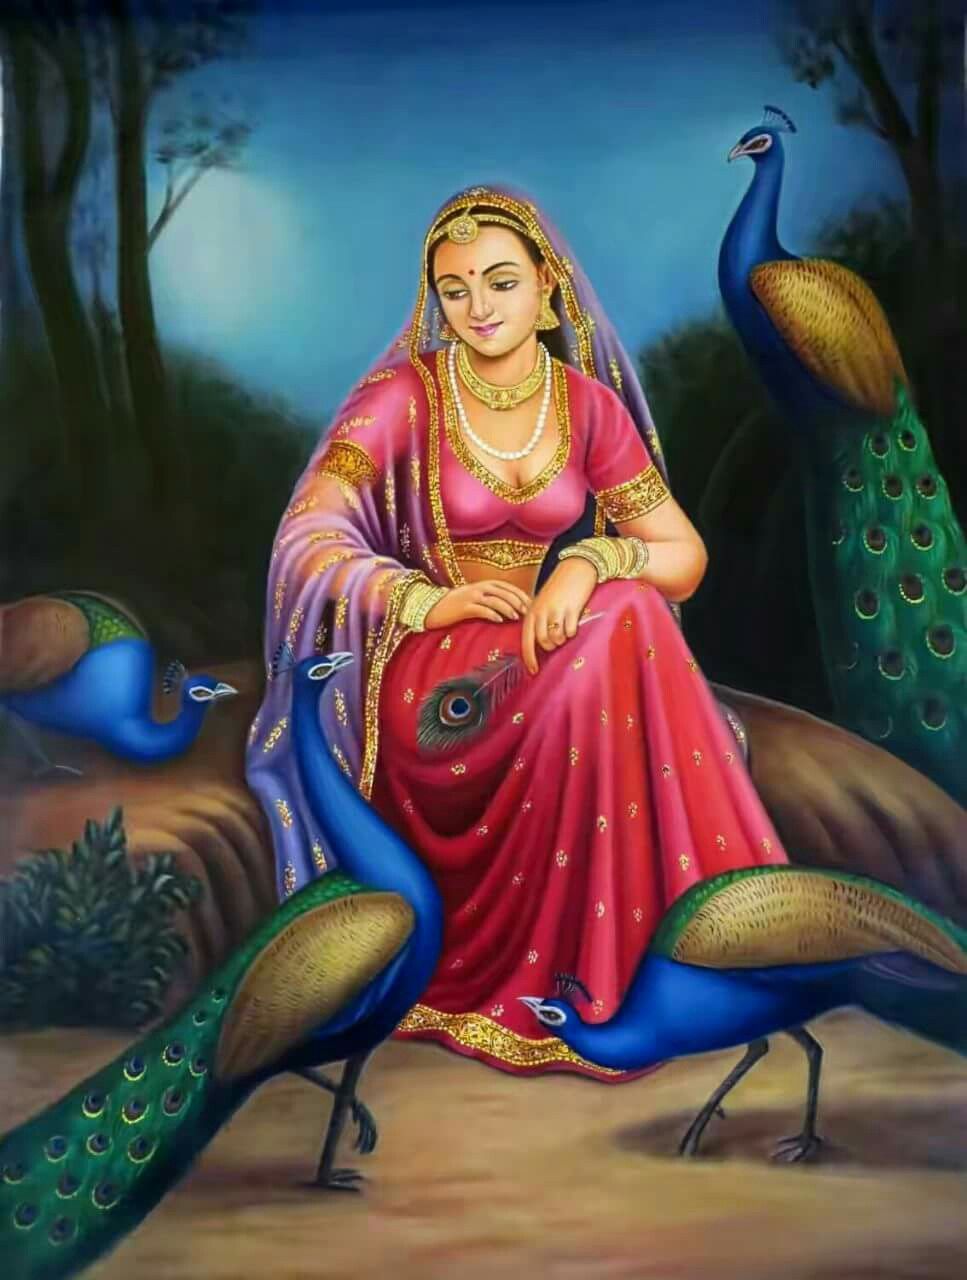 Indian Village Woman Painting. Explore